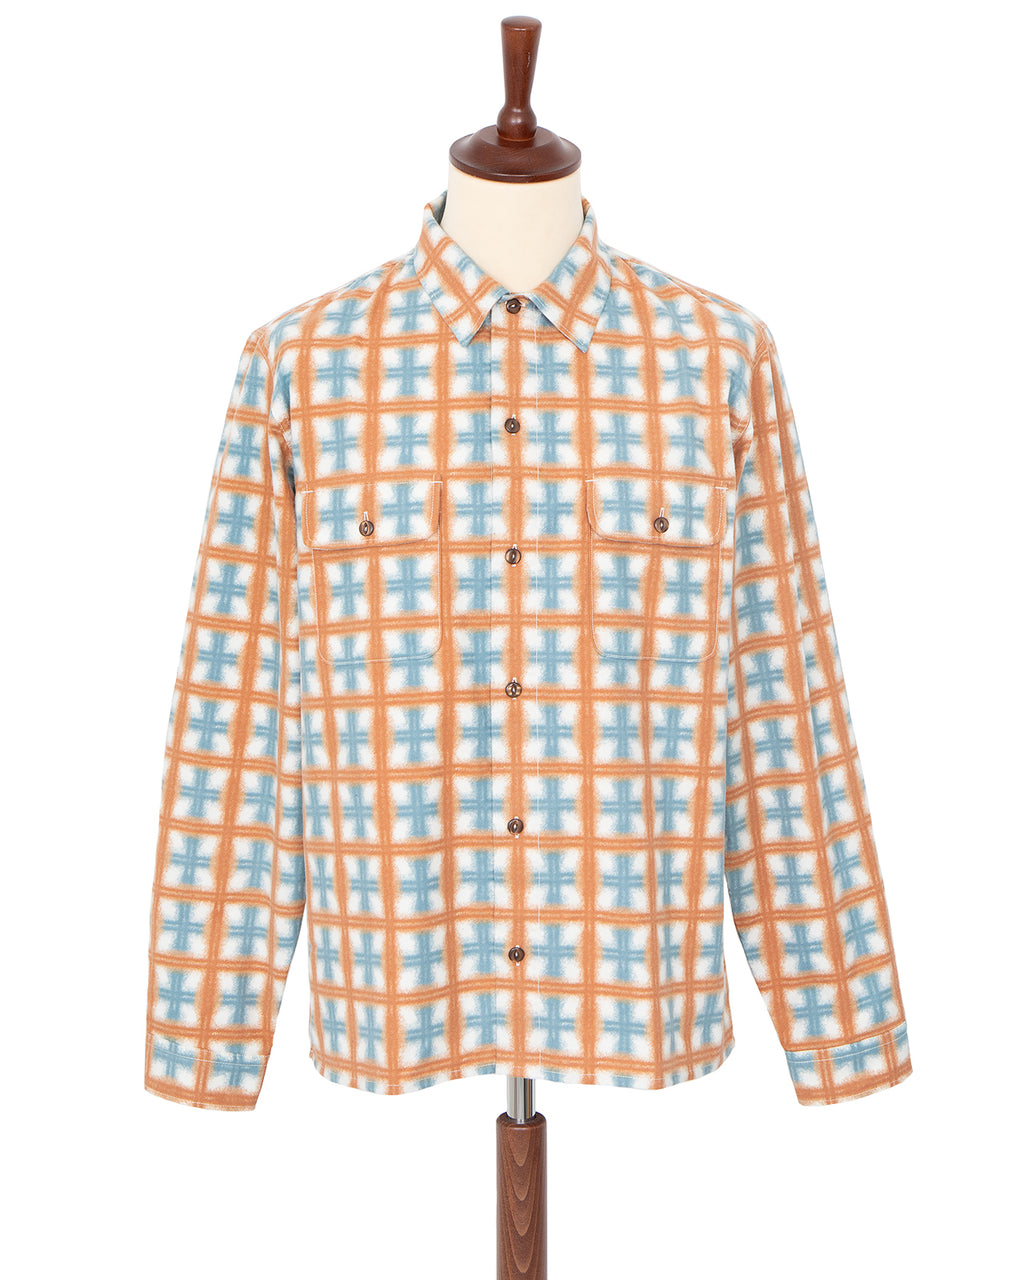 Indigofera Webster Shirt, Printed Flannel, White / Orange / Blue